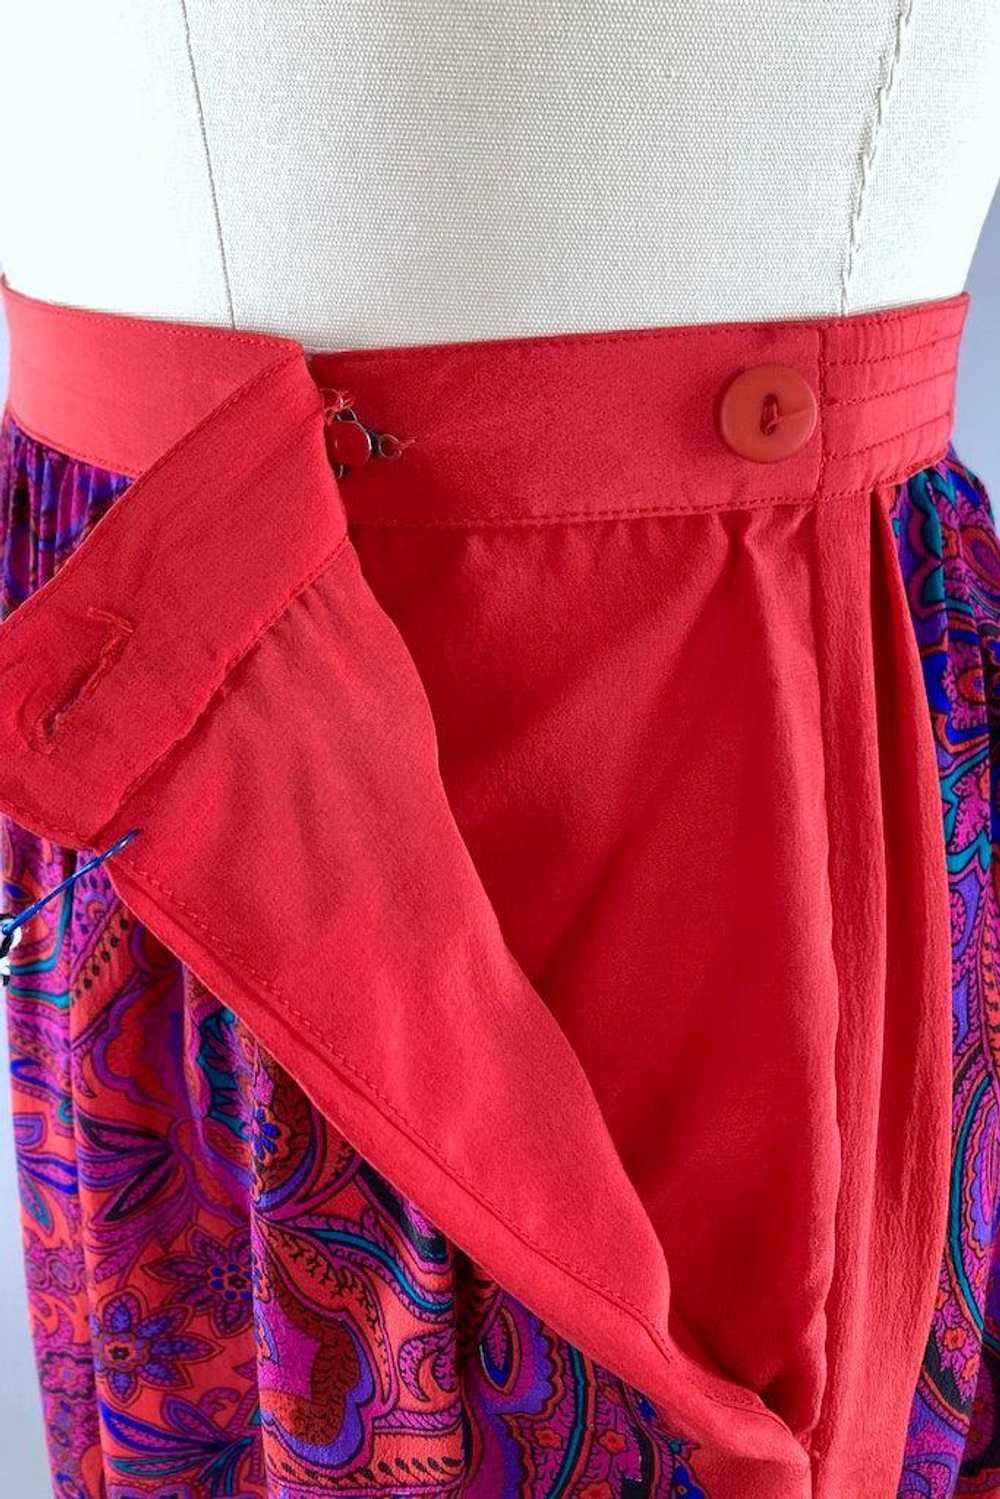 Vintage 80s Red & Purple Silk Skirt - image 6